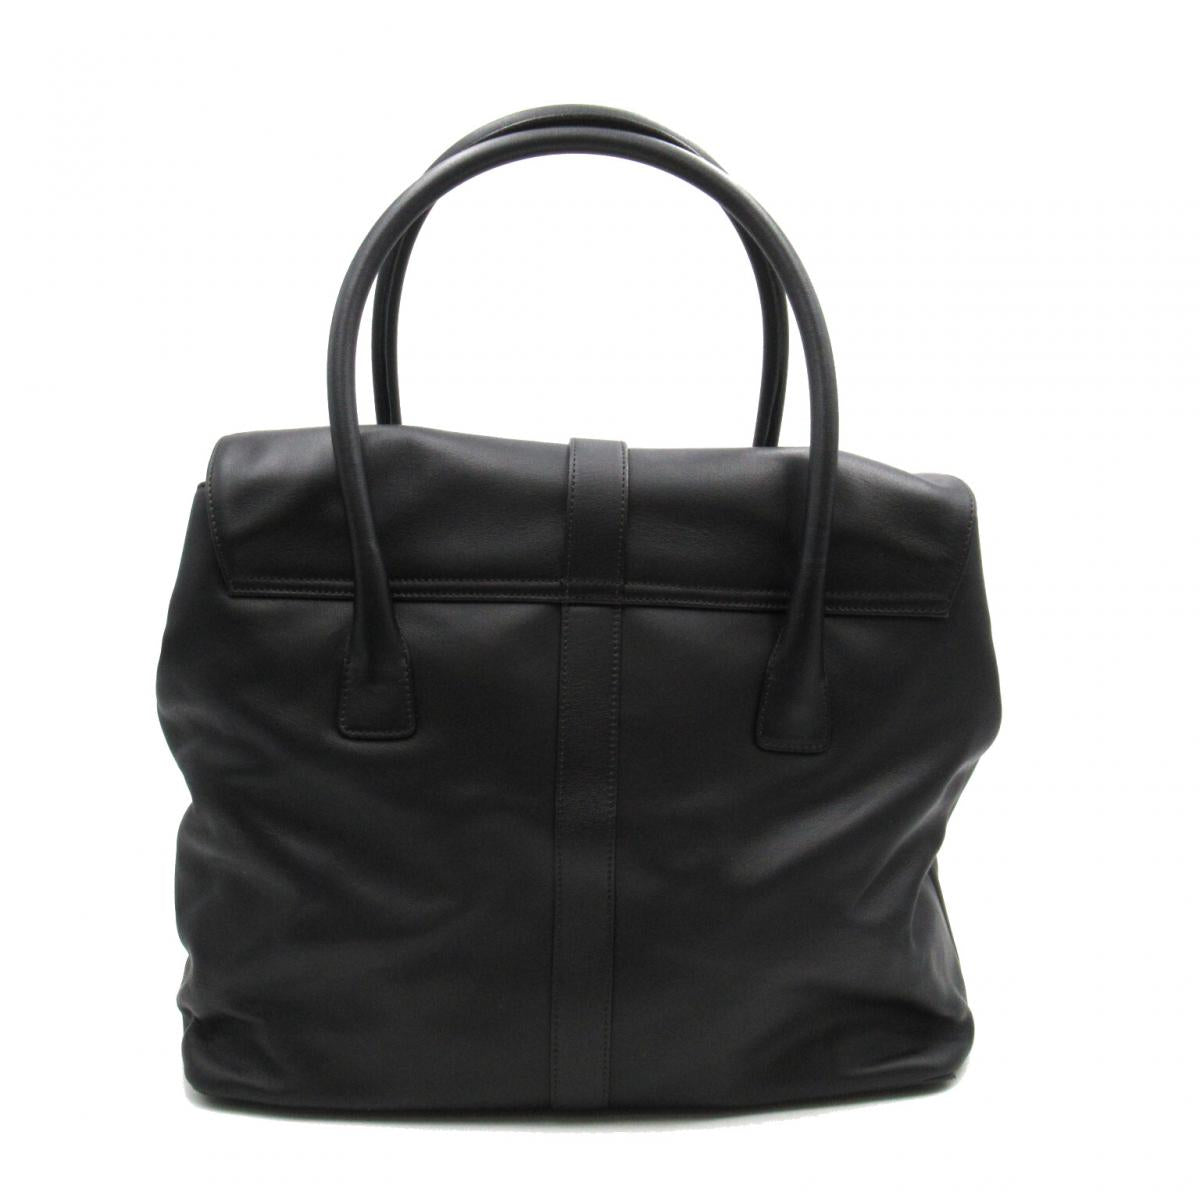 Leather Shopper Bag